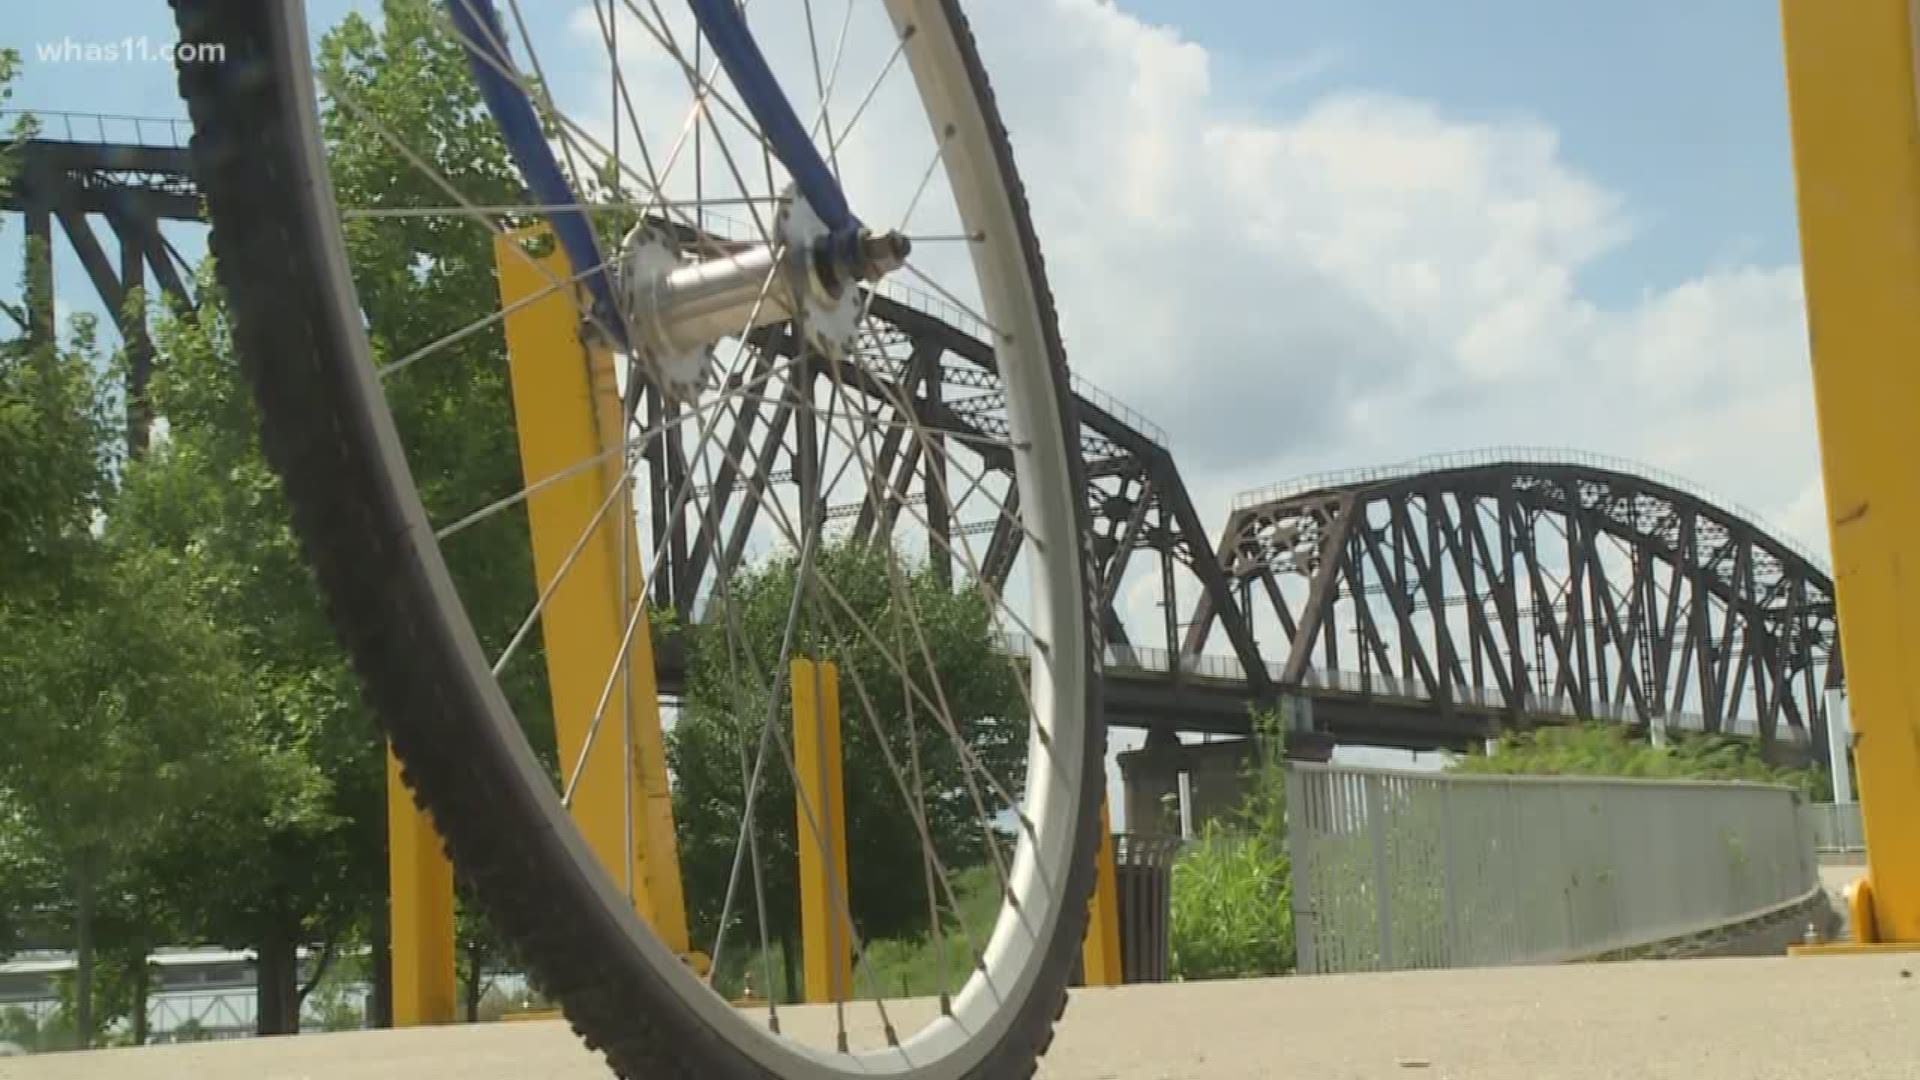 biking to the beat with Louisville public art